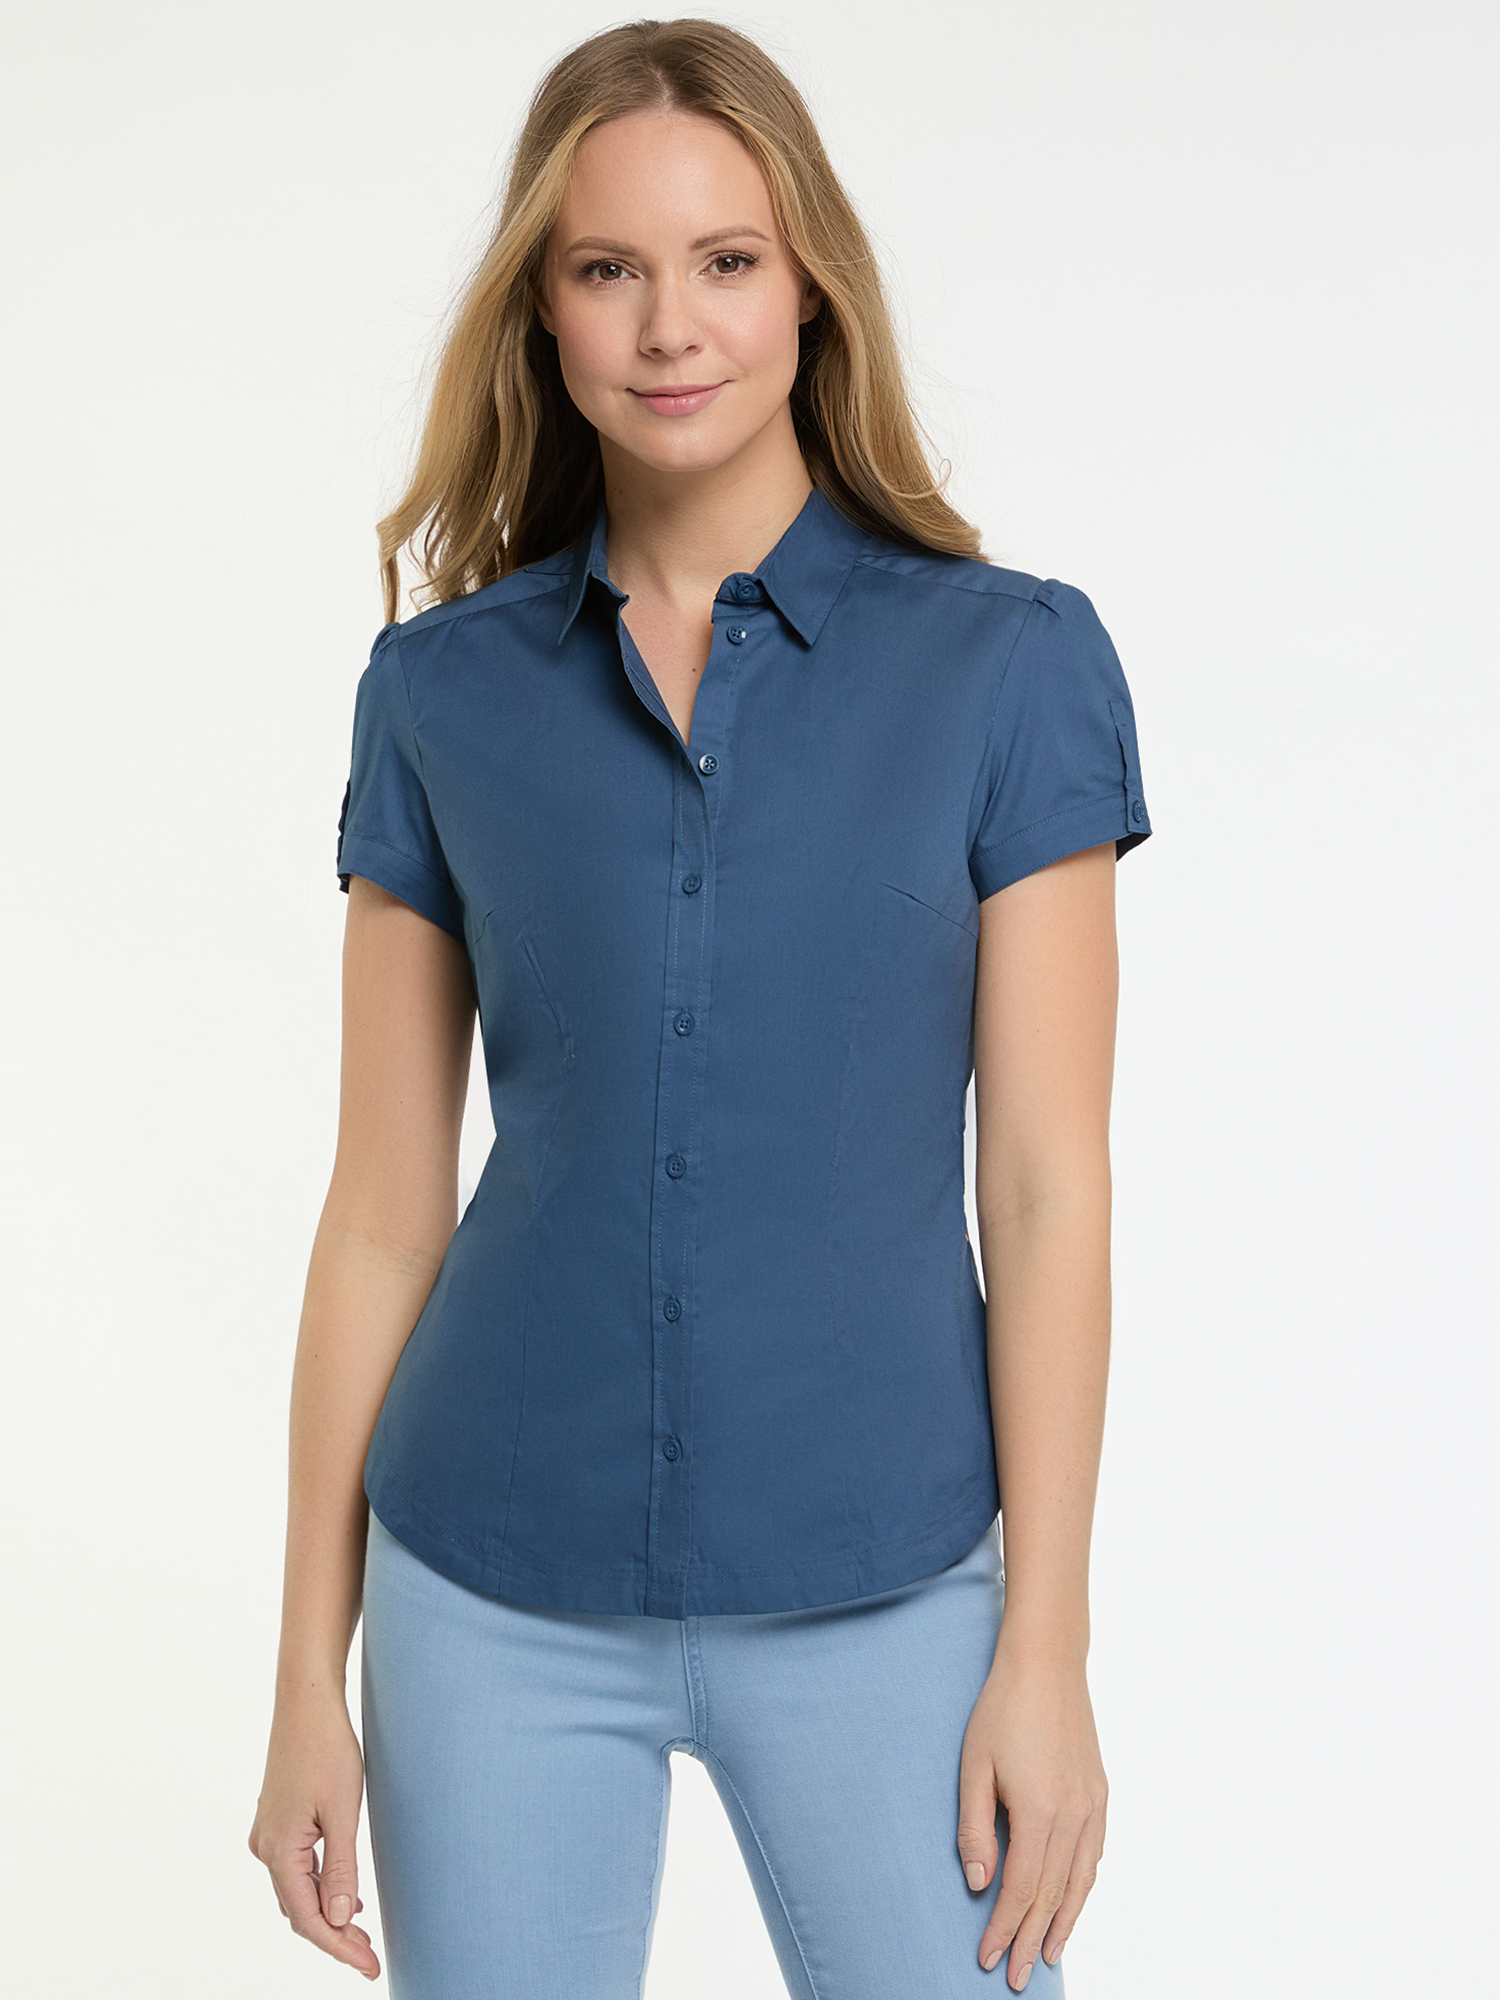 Рубашка женская oodji 13K01004-1B синяя 34